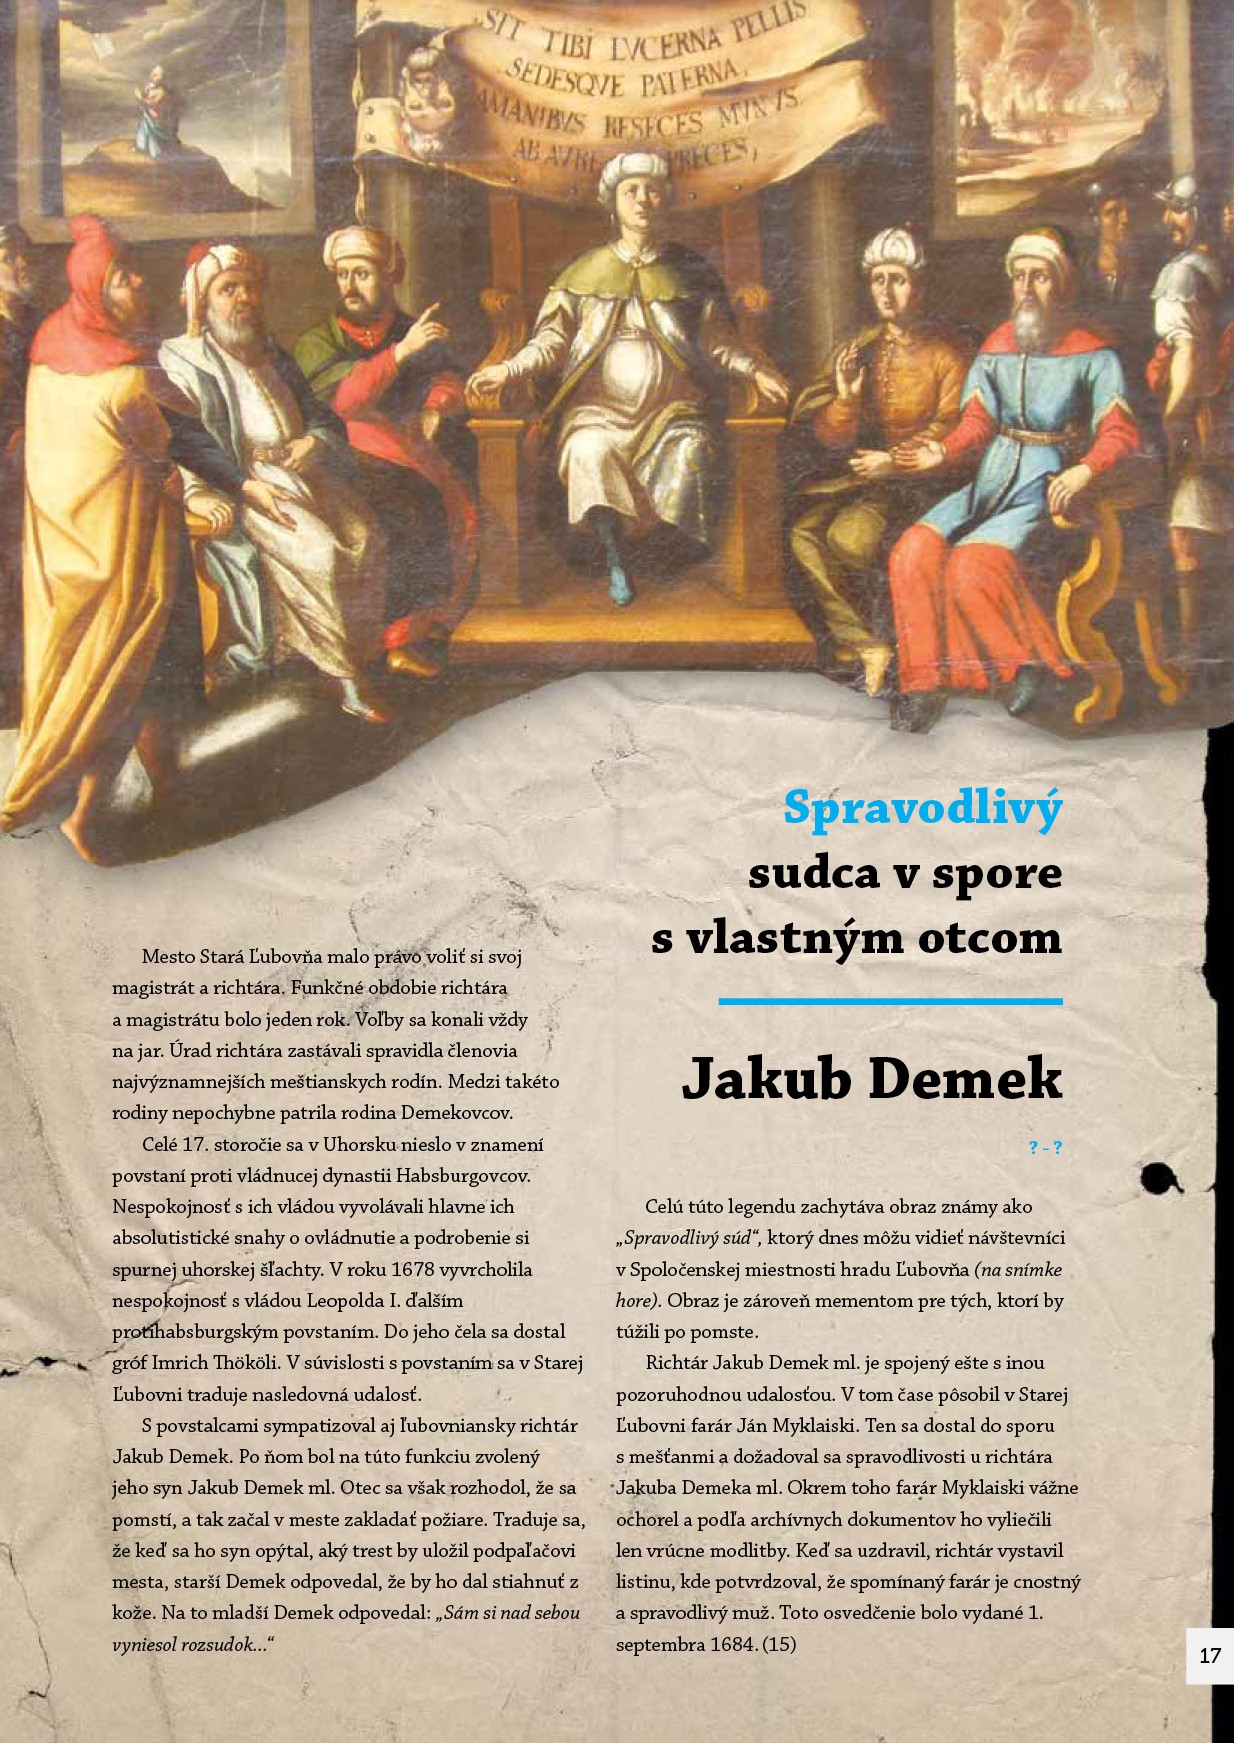 Jakub Demek